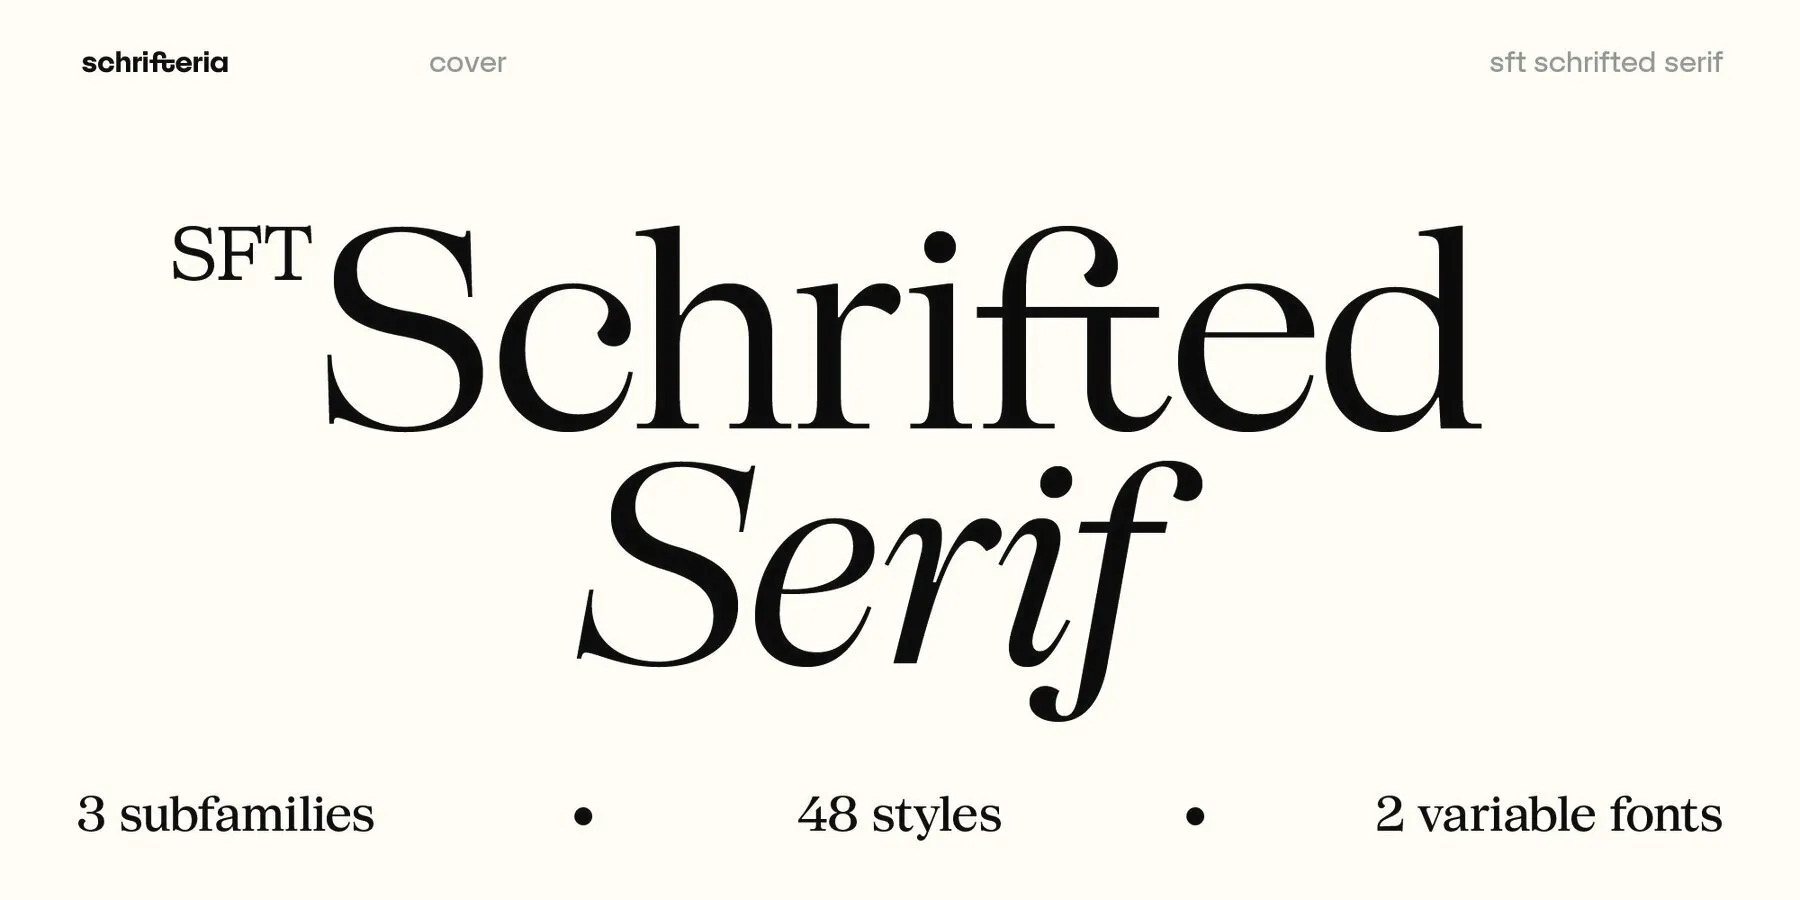 SFT Schrifted Serif